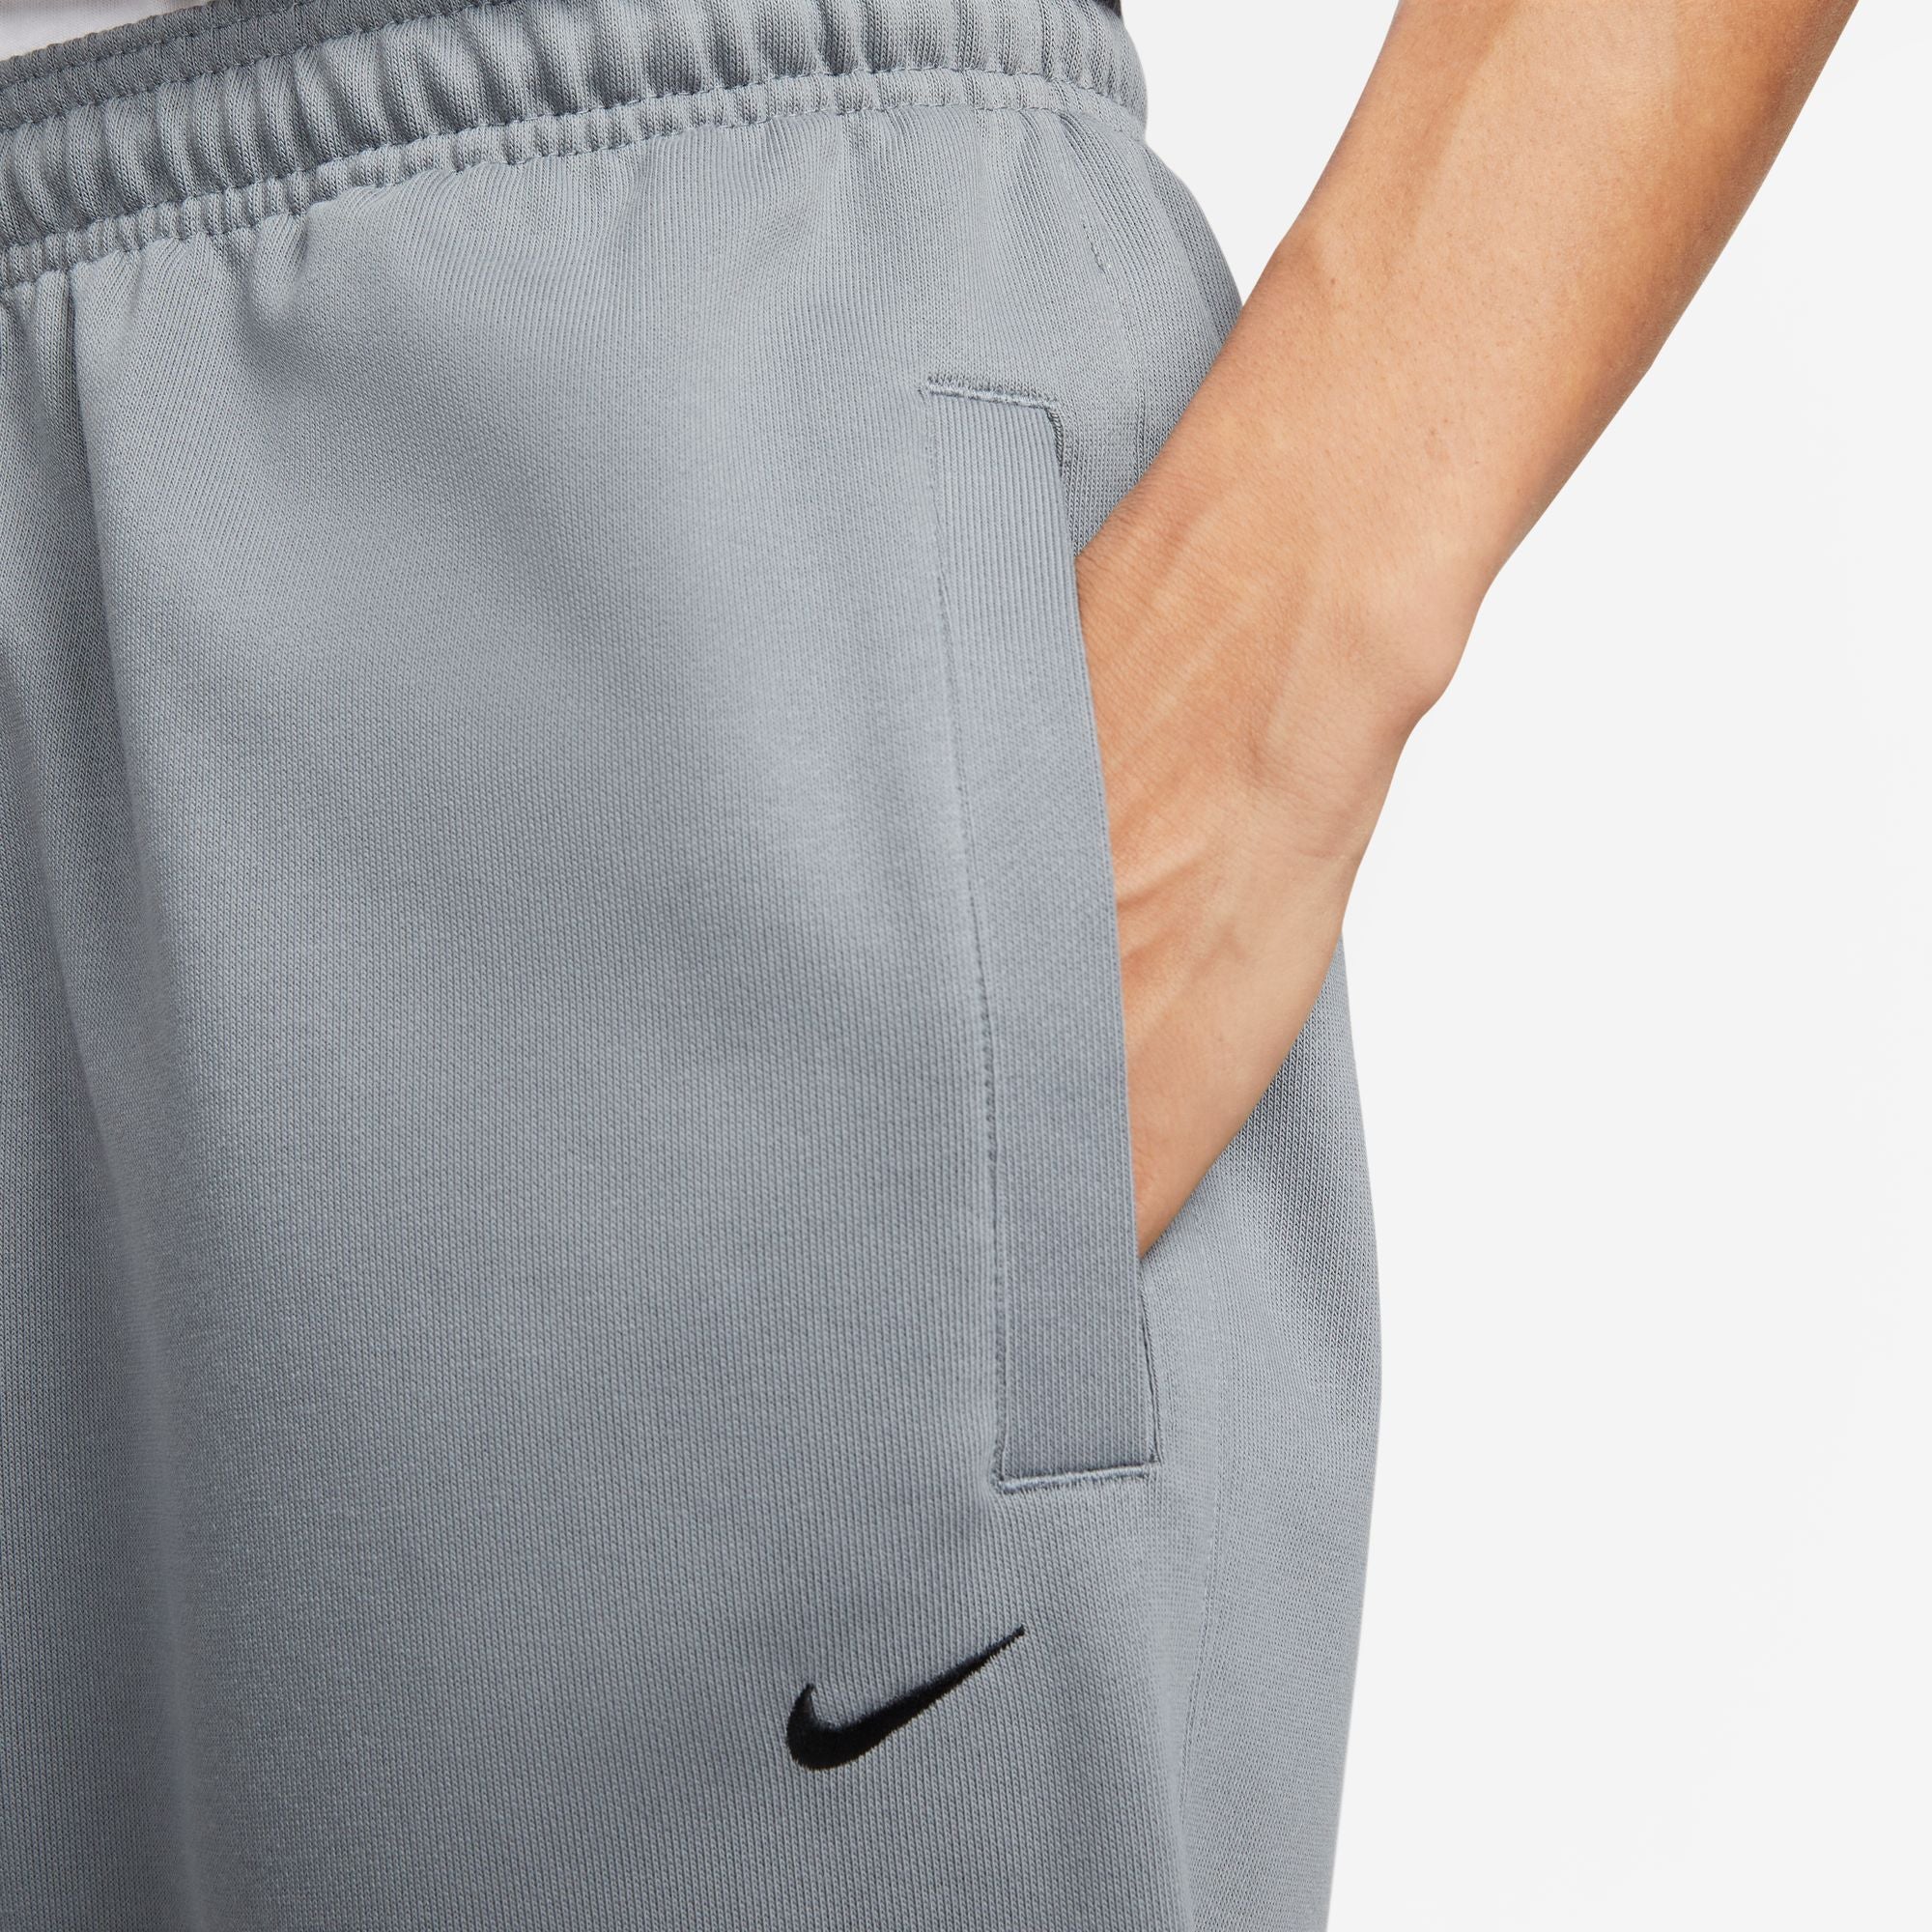 Nike Dri-FIT Academy 23 Soccer Pants